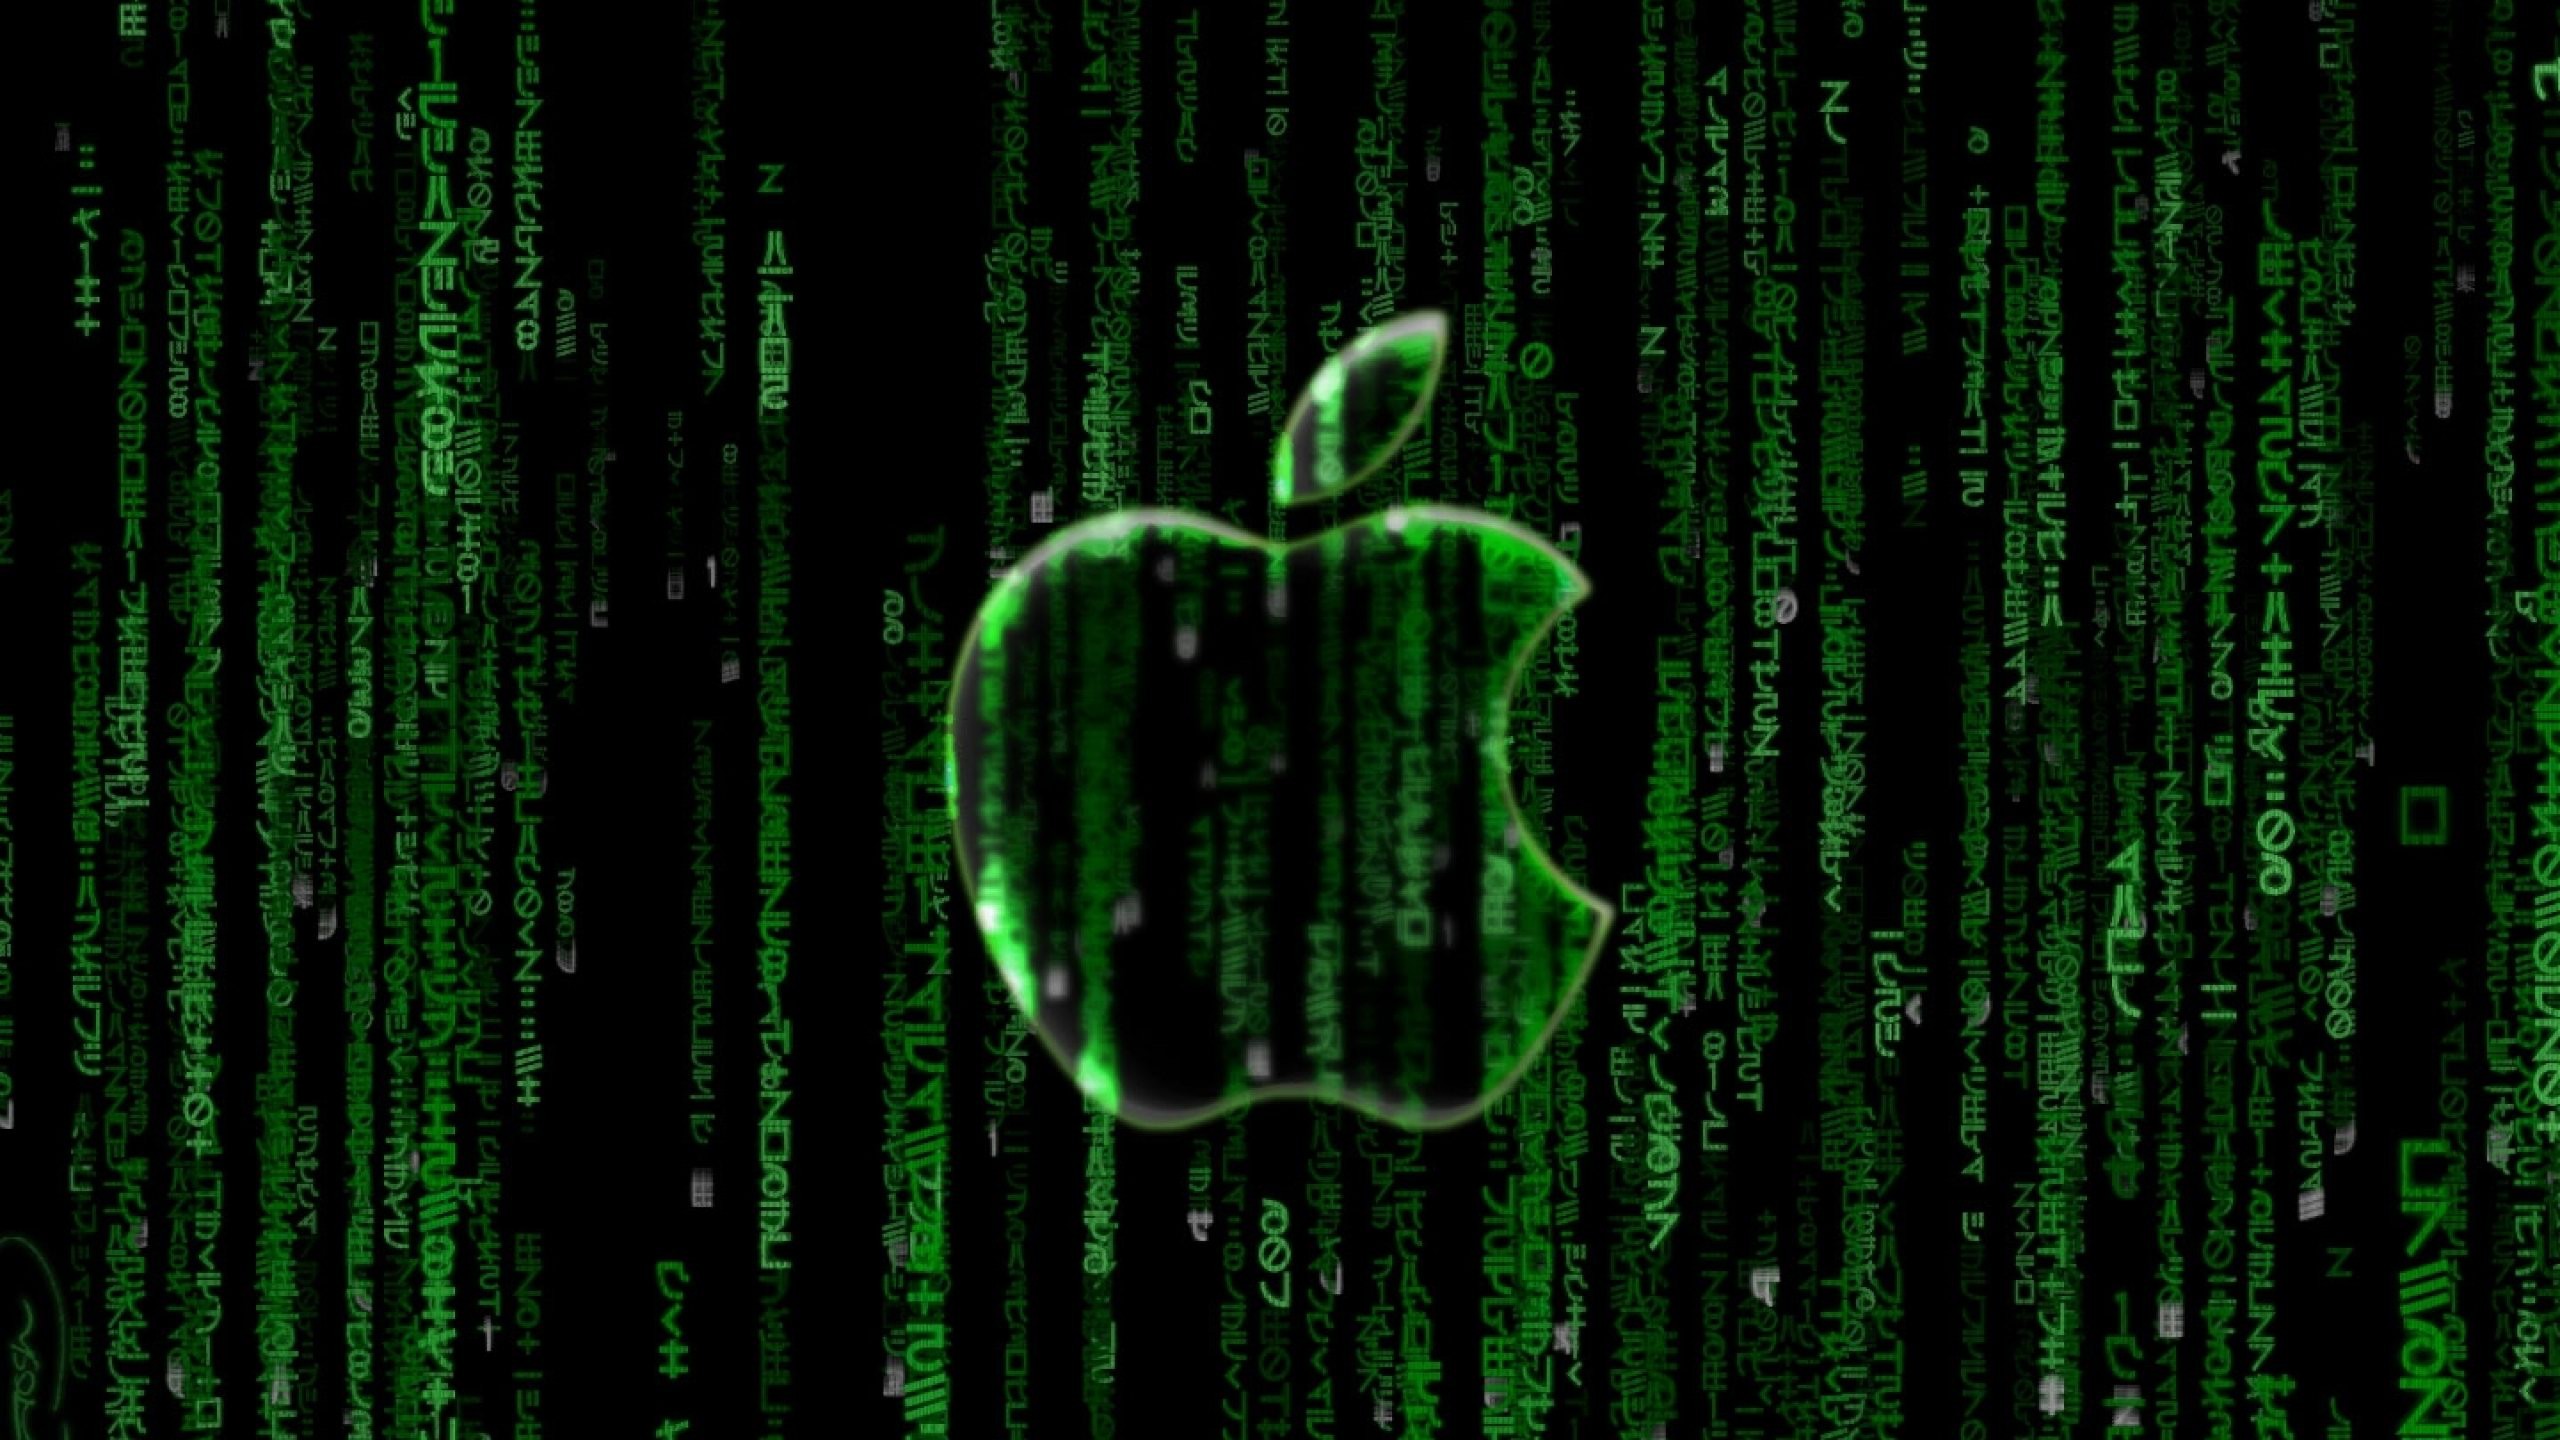 Wallpapers Matrix Apple Inc Mac Logos Hd Online 2560x1440 ...